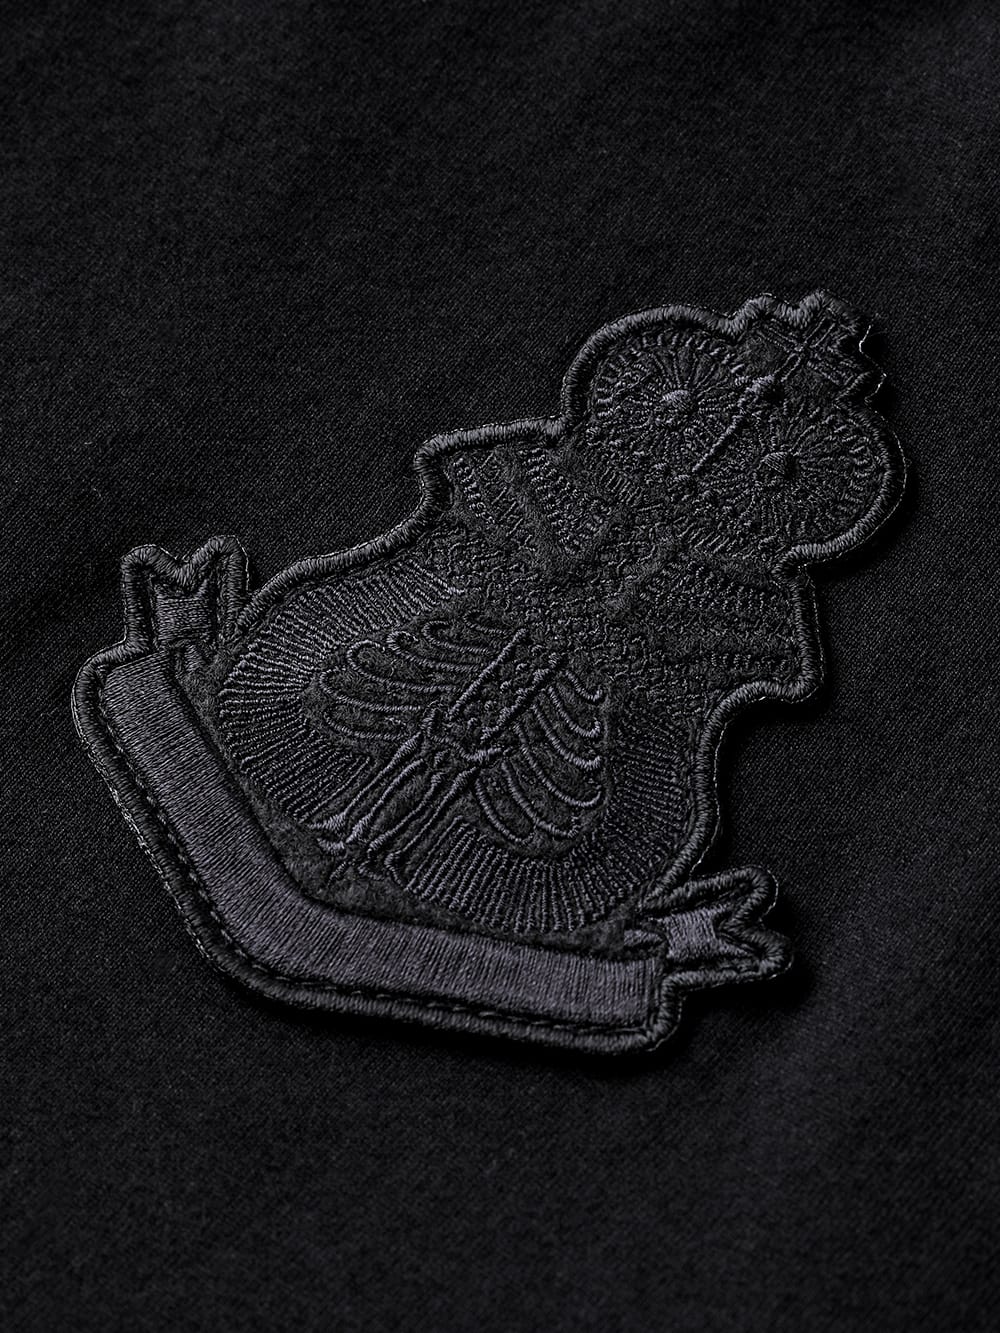 S logo and bone emblem. (s/s pocket tee)